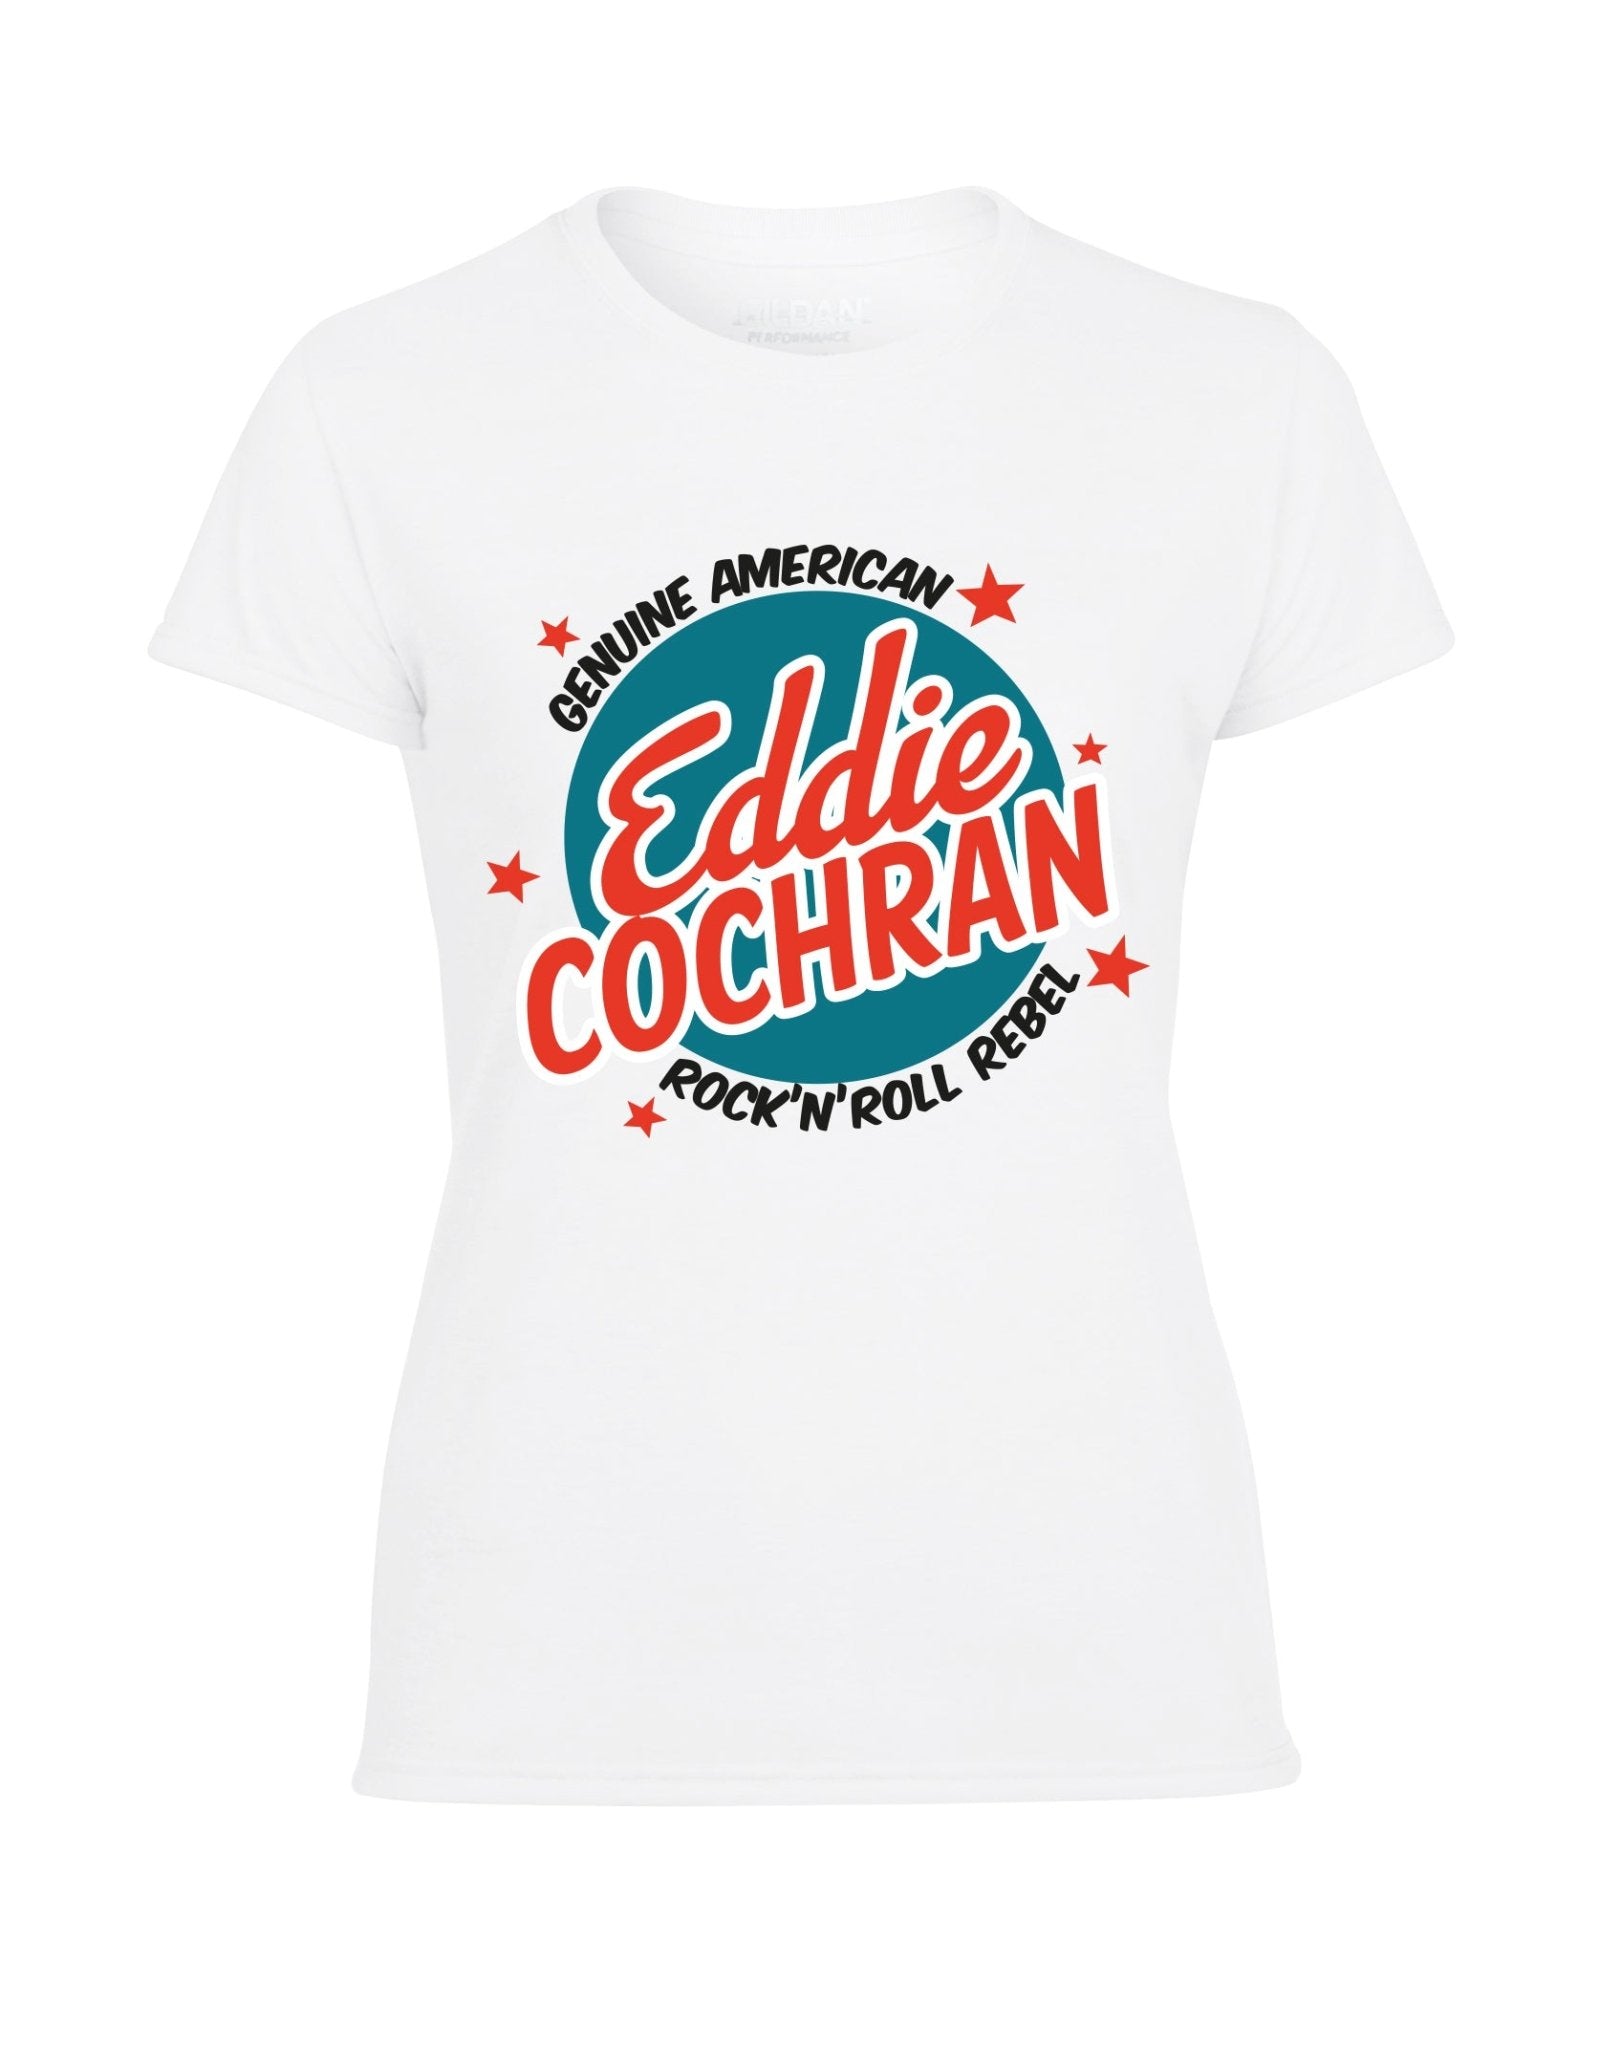 Eddie Cochran - rock'n'roll rebel - ladies fit t-shirt- various colours - Dirty Stop Outs